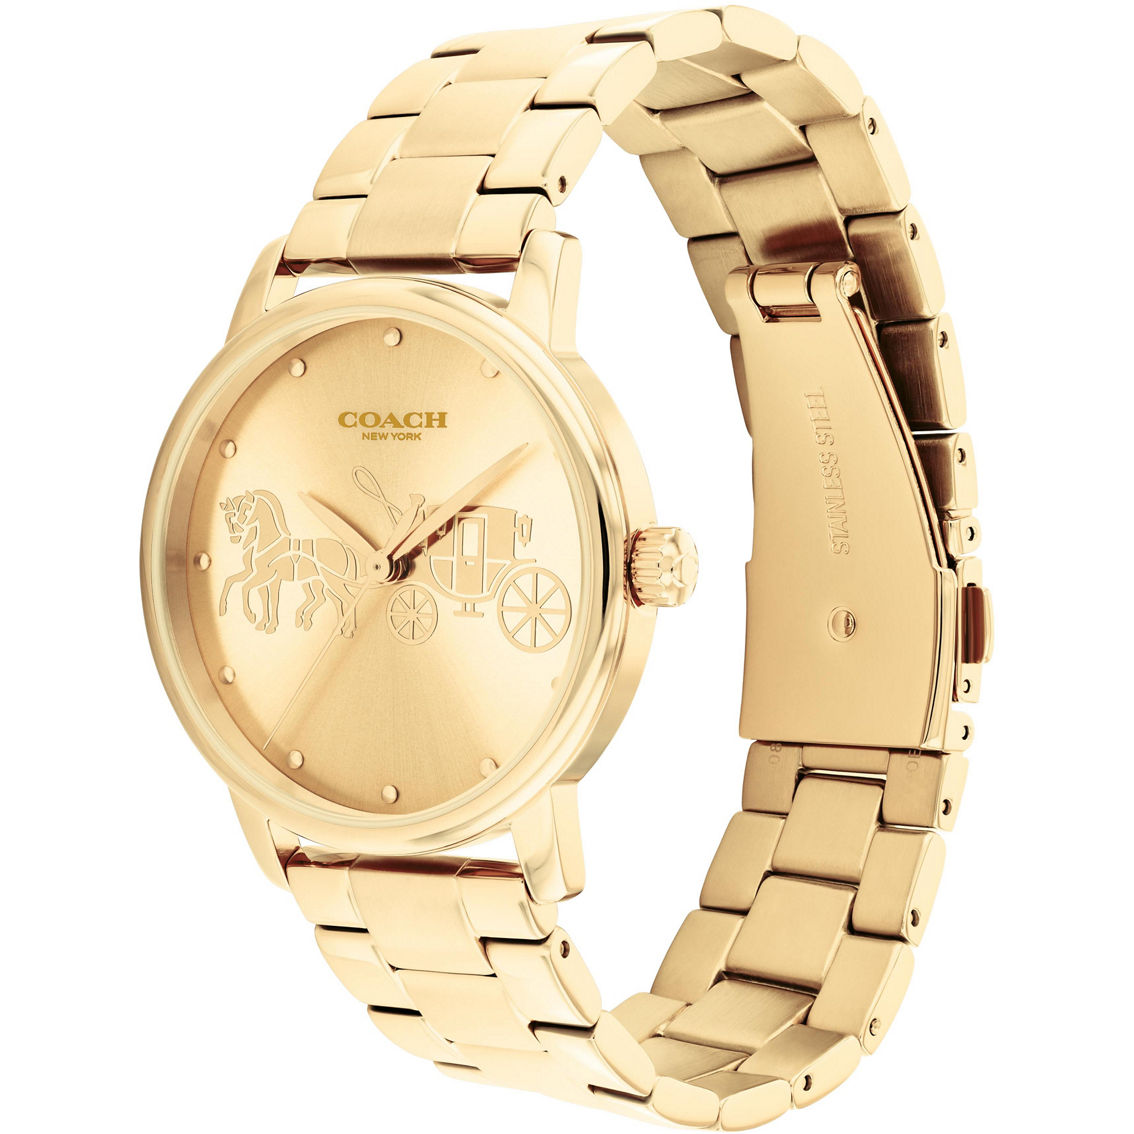 COACH Women's Grand Goldtone Watch 14503075 - Image 3 of 3